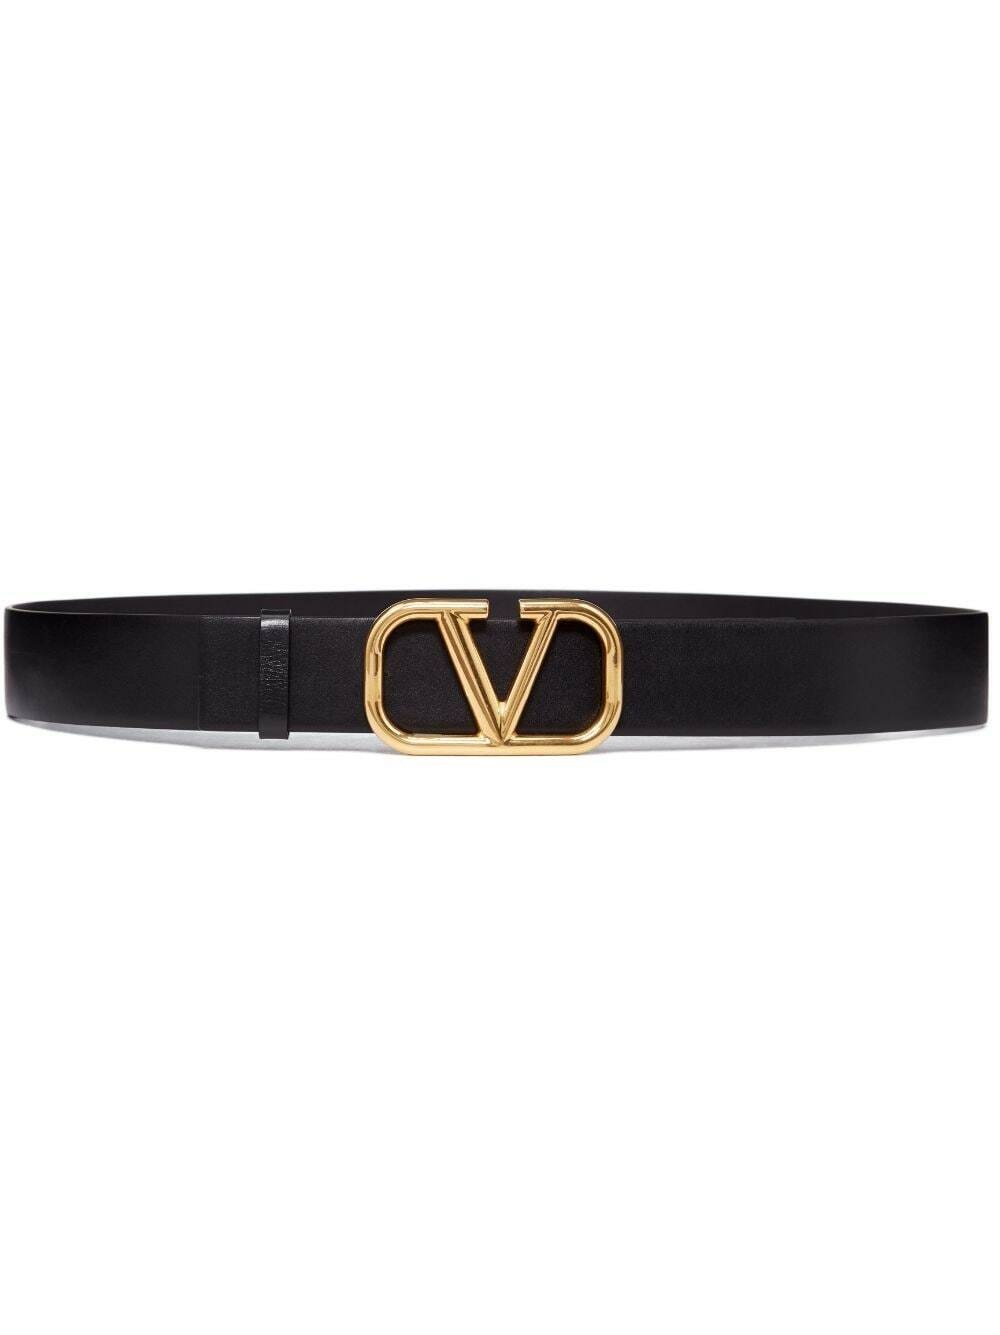 VALENTINO GARAVANI VLogo 3cm Leather Belt for Men